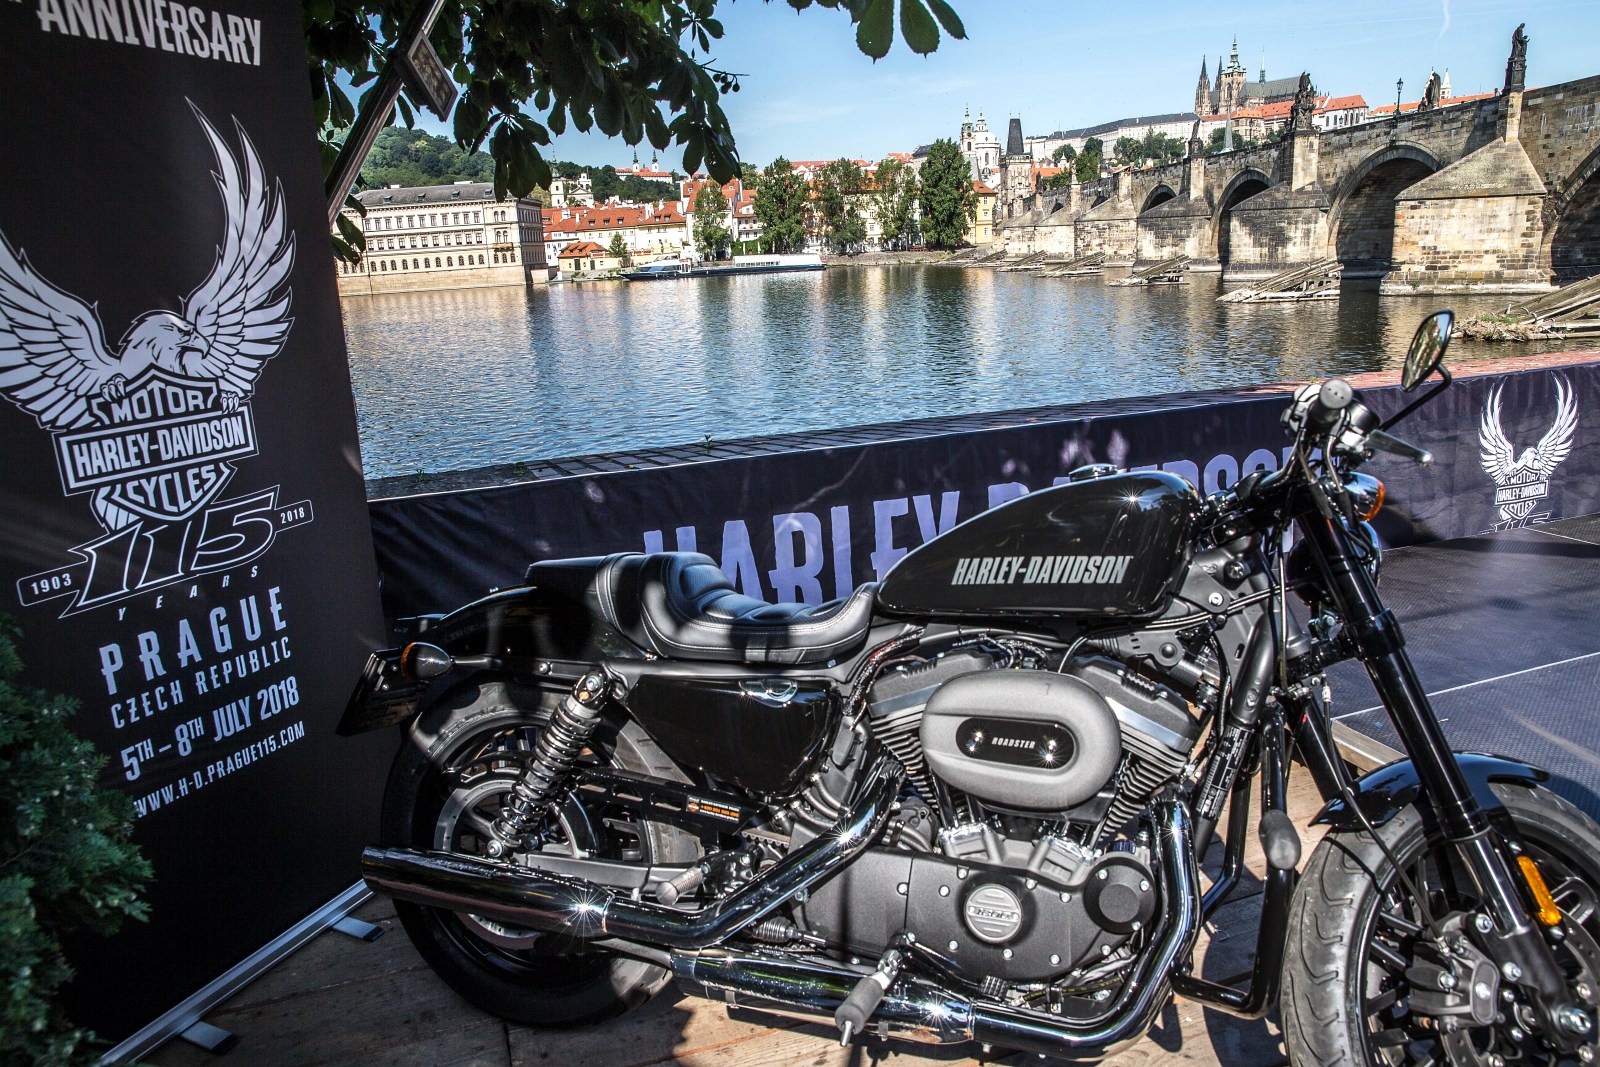 Harley Davidson Czechy z